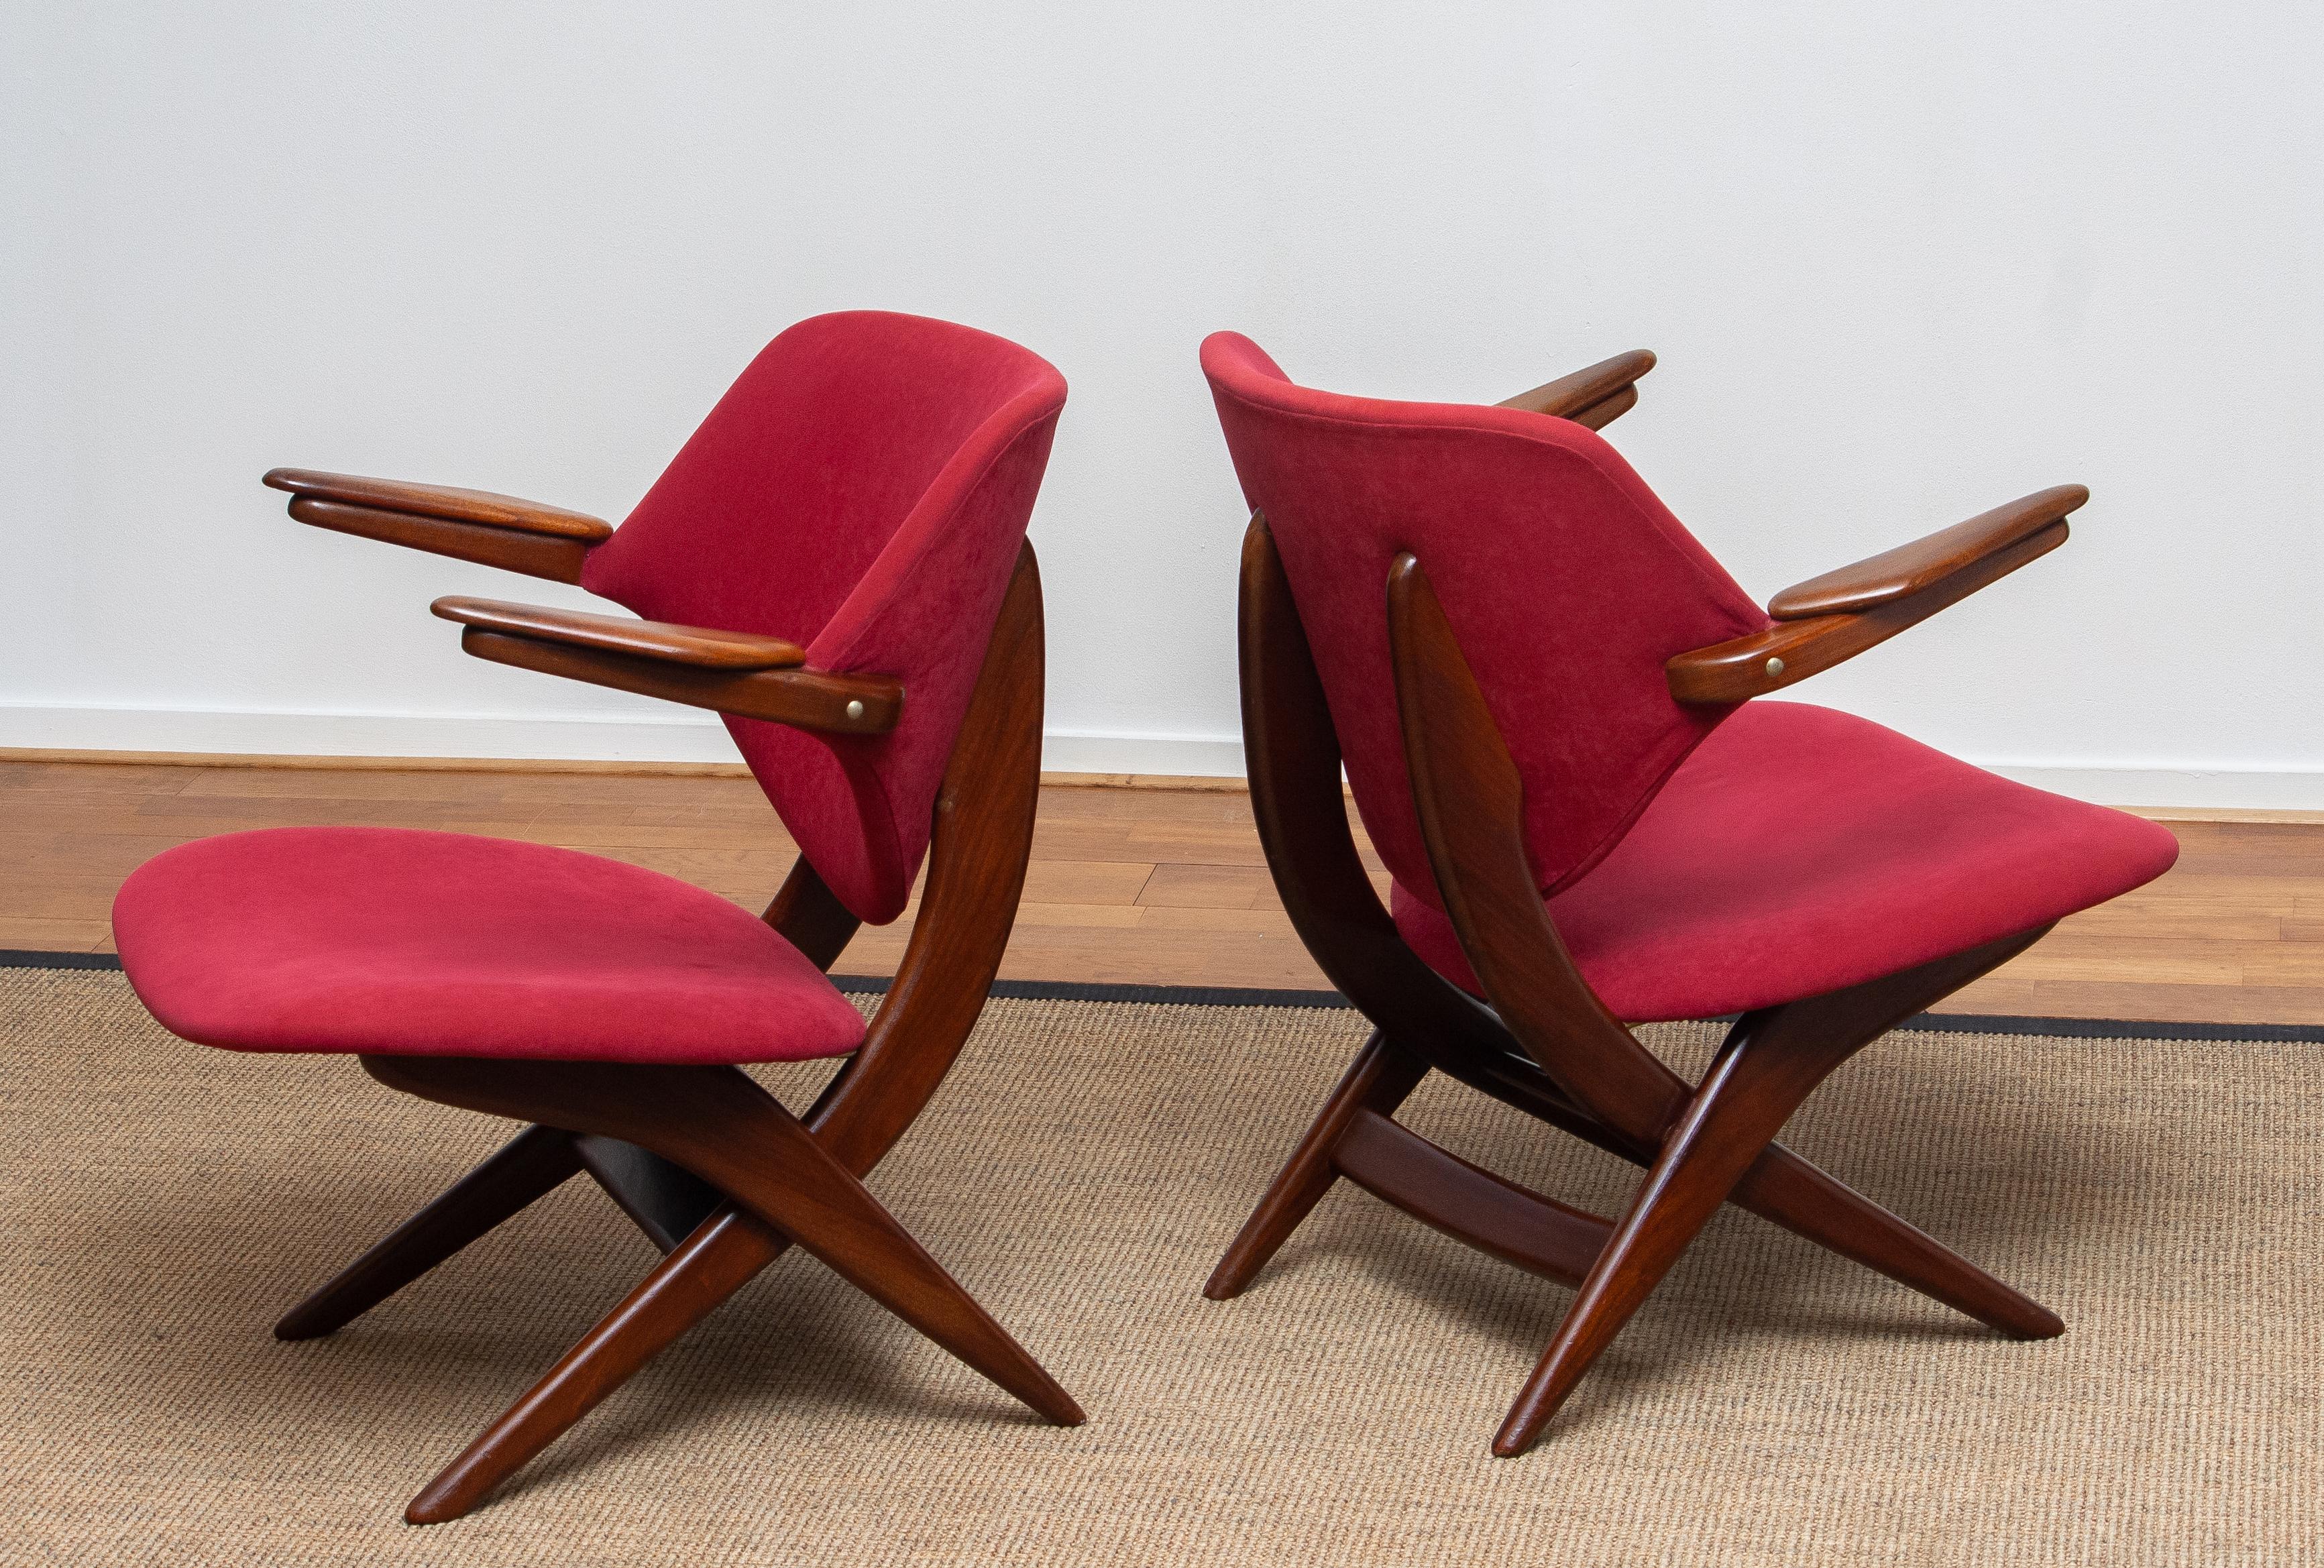 1950s, Set of Two Teak Lounge/Easy Chairs by Louis Van Teeffelen for Wébé 1